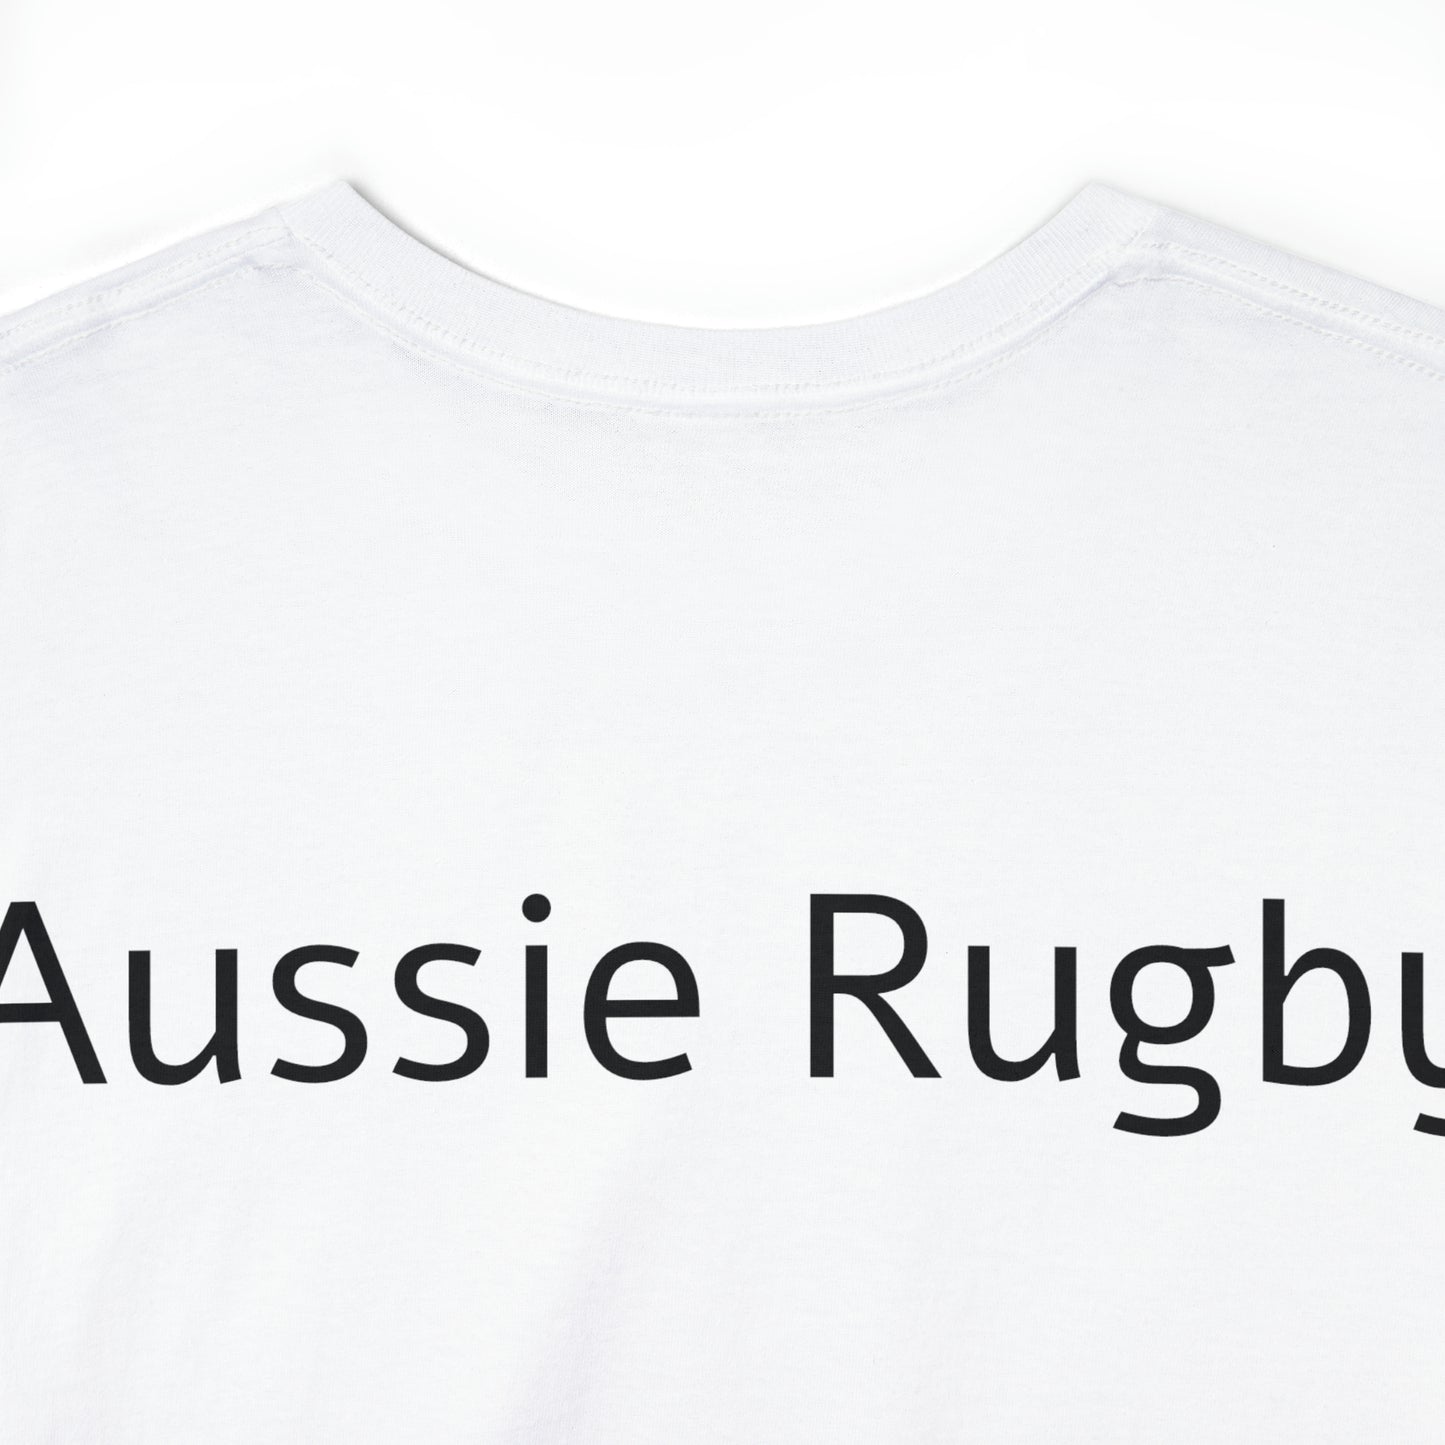 Ready Aussies - light shirts